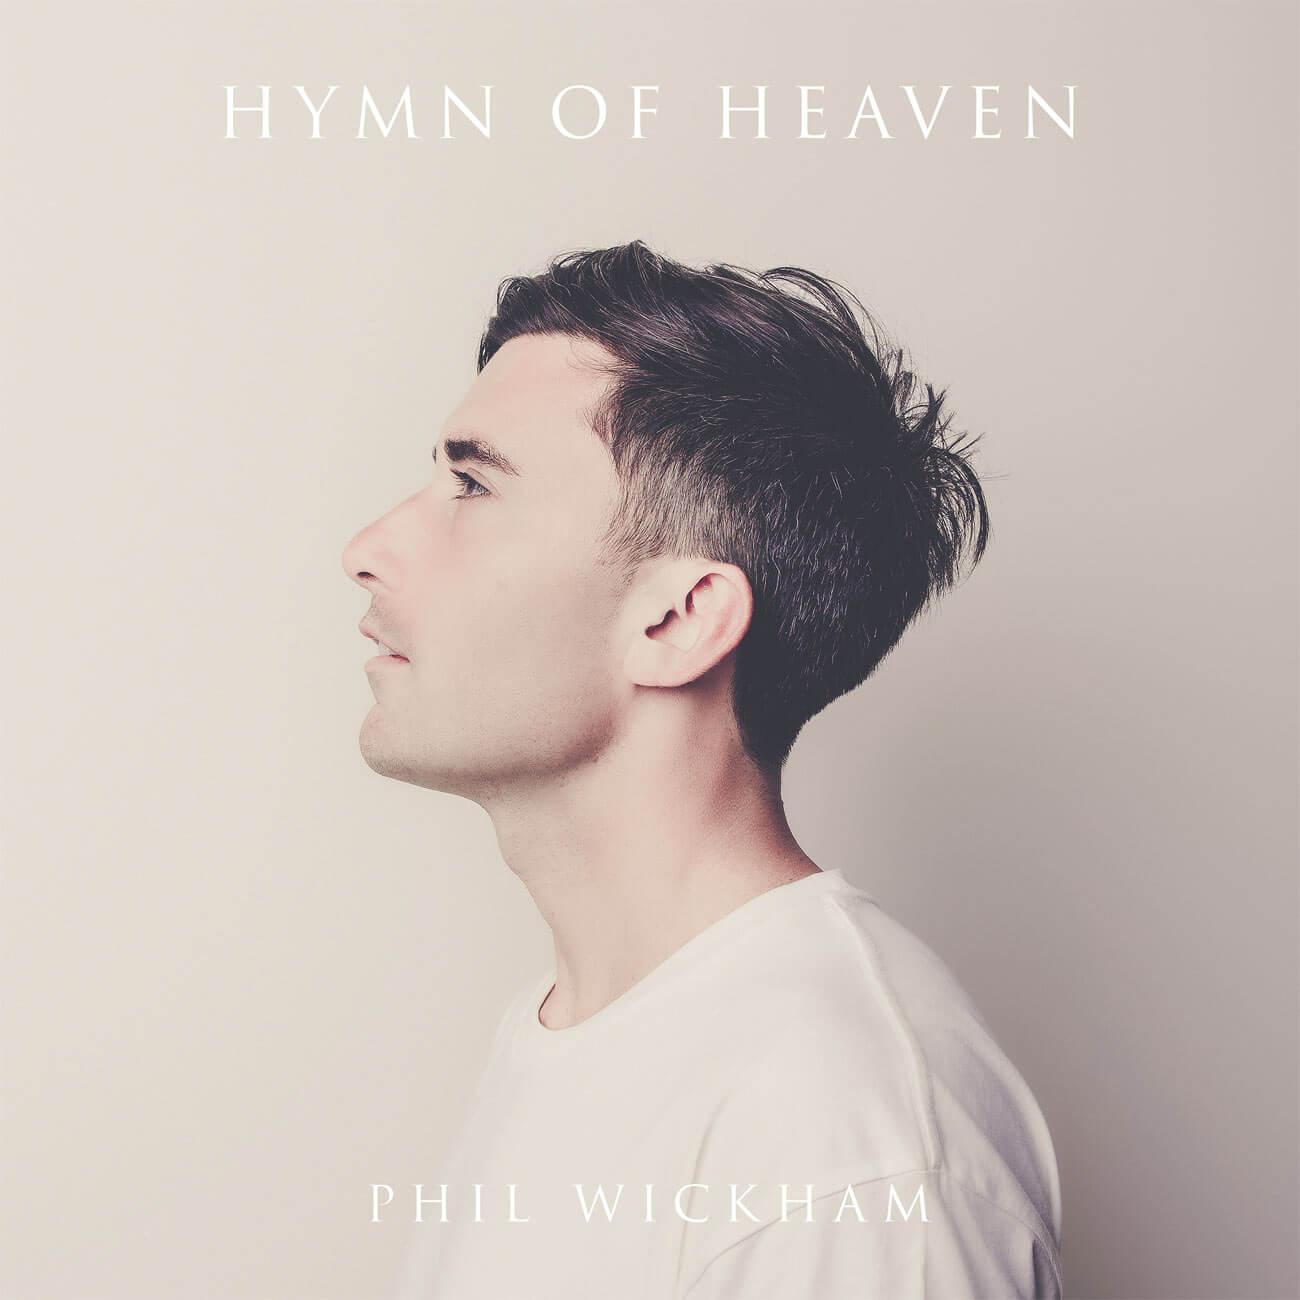 Hymn of Heaven Phil Wickham